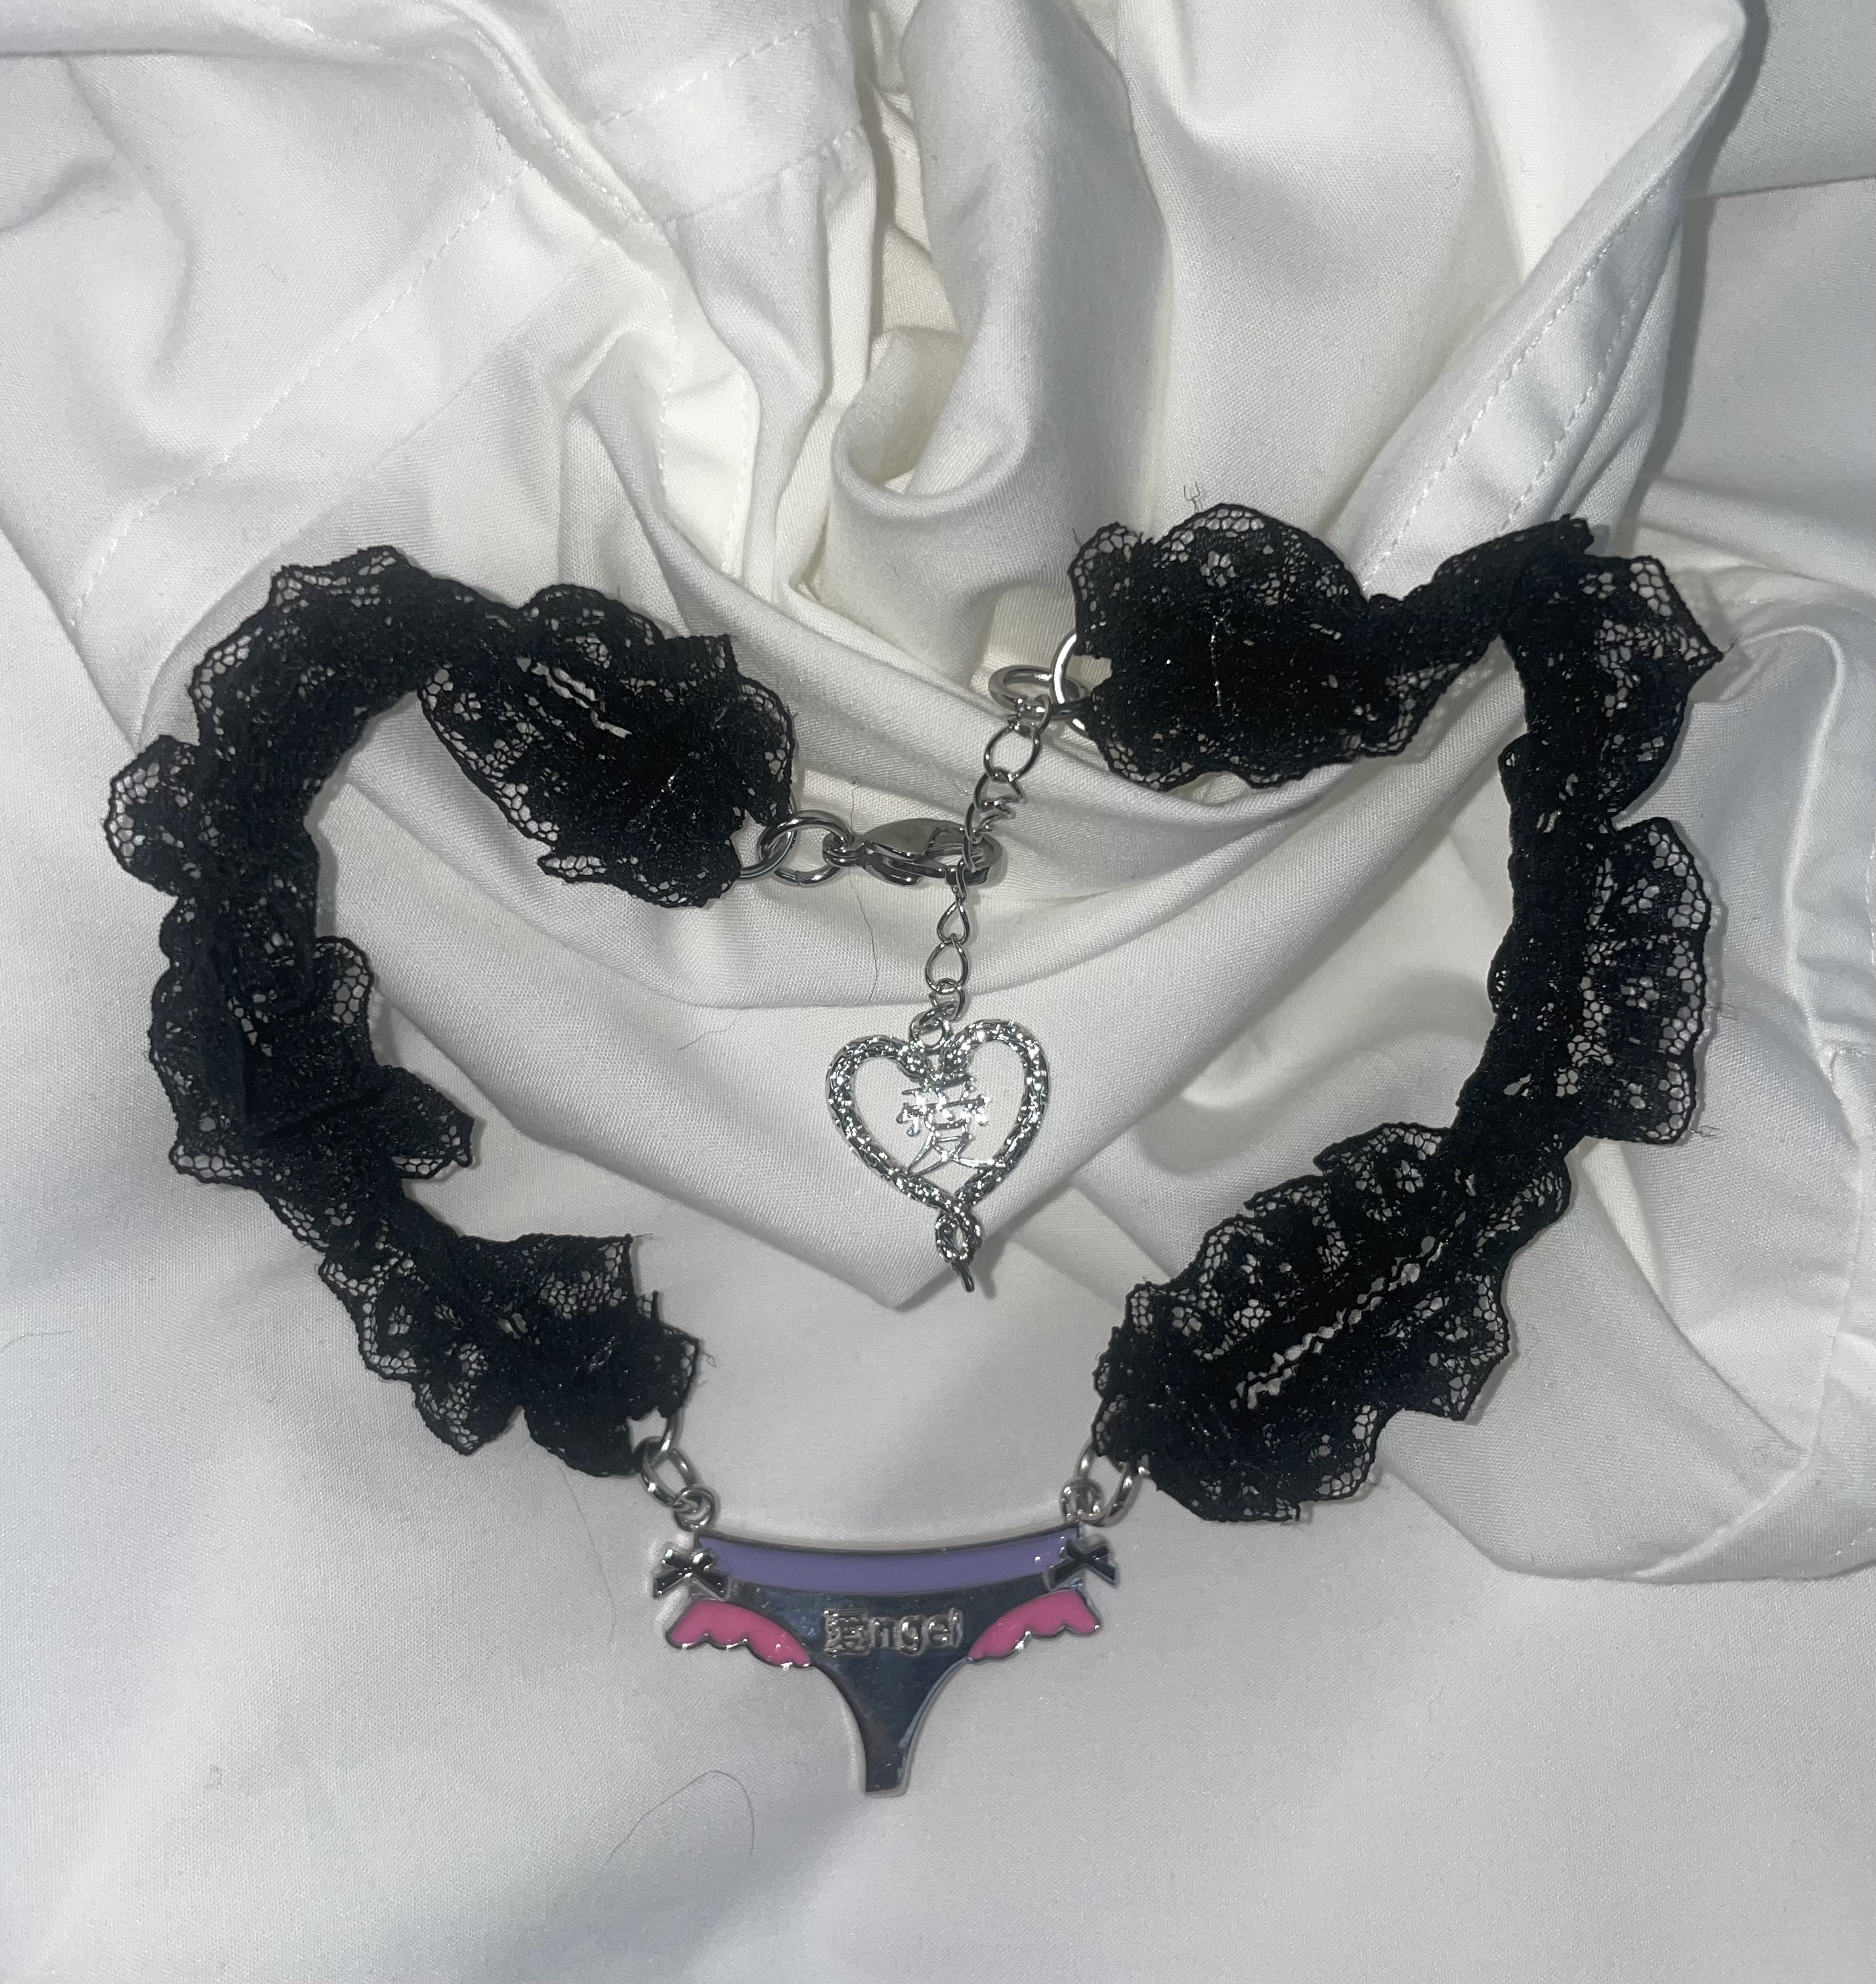 Angel lace necklace - black